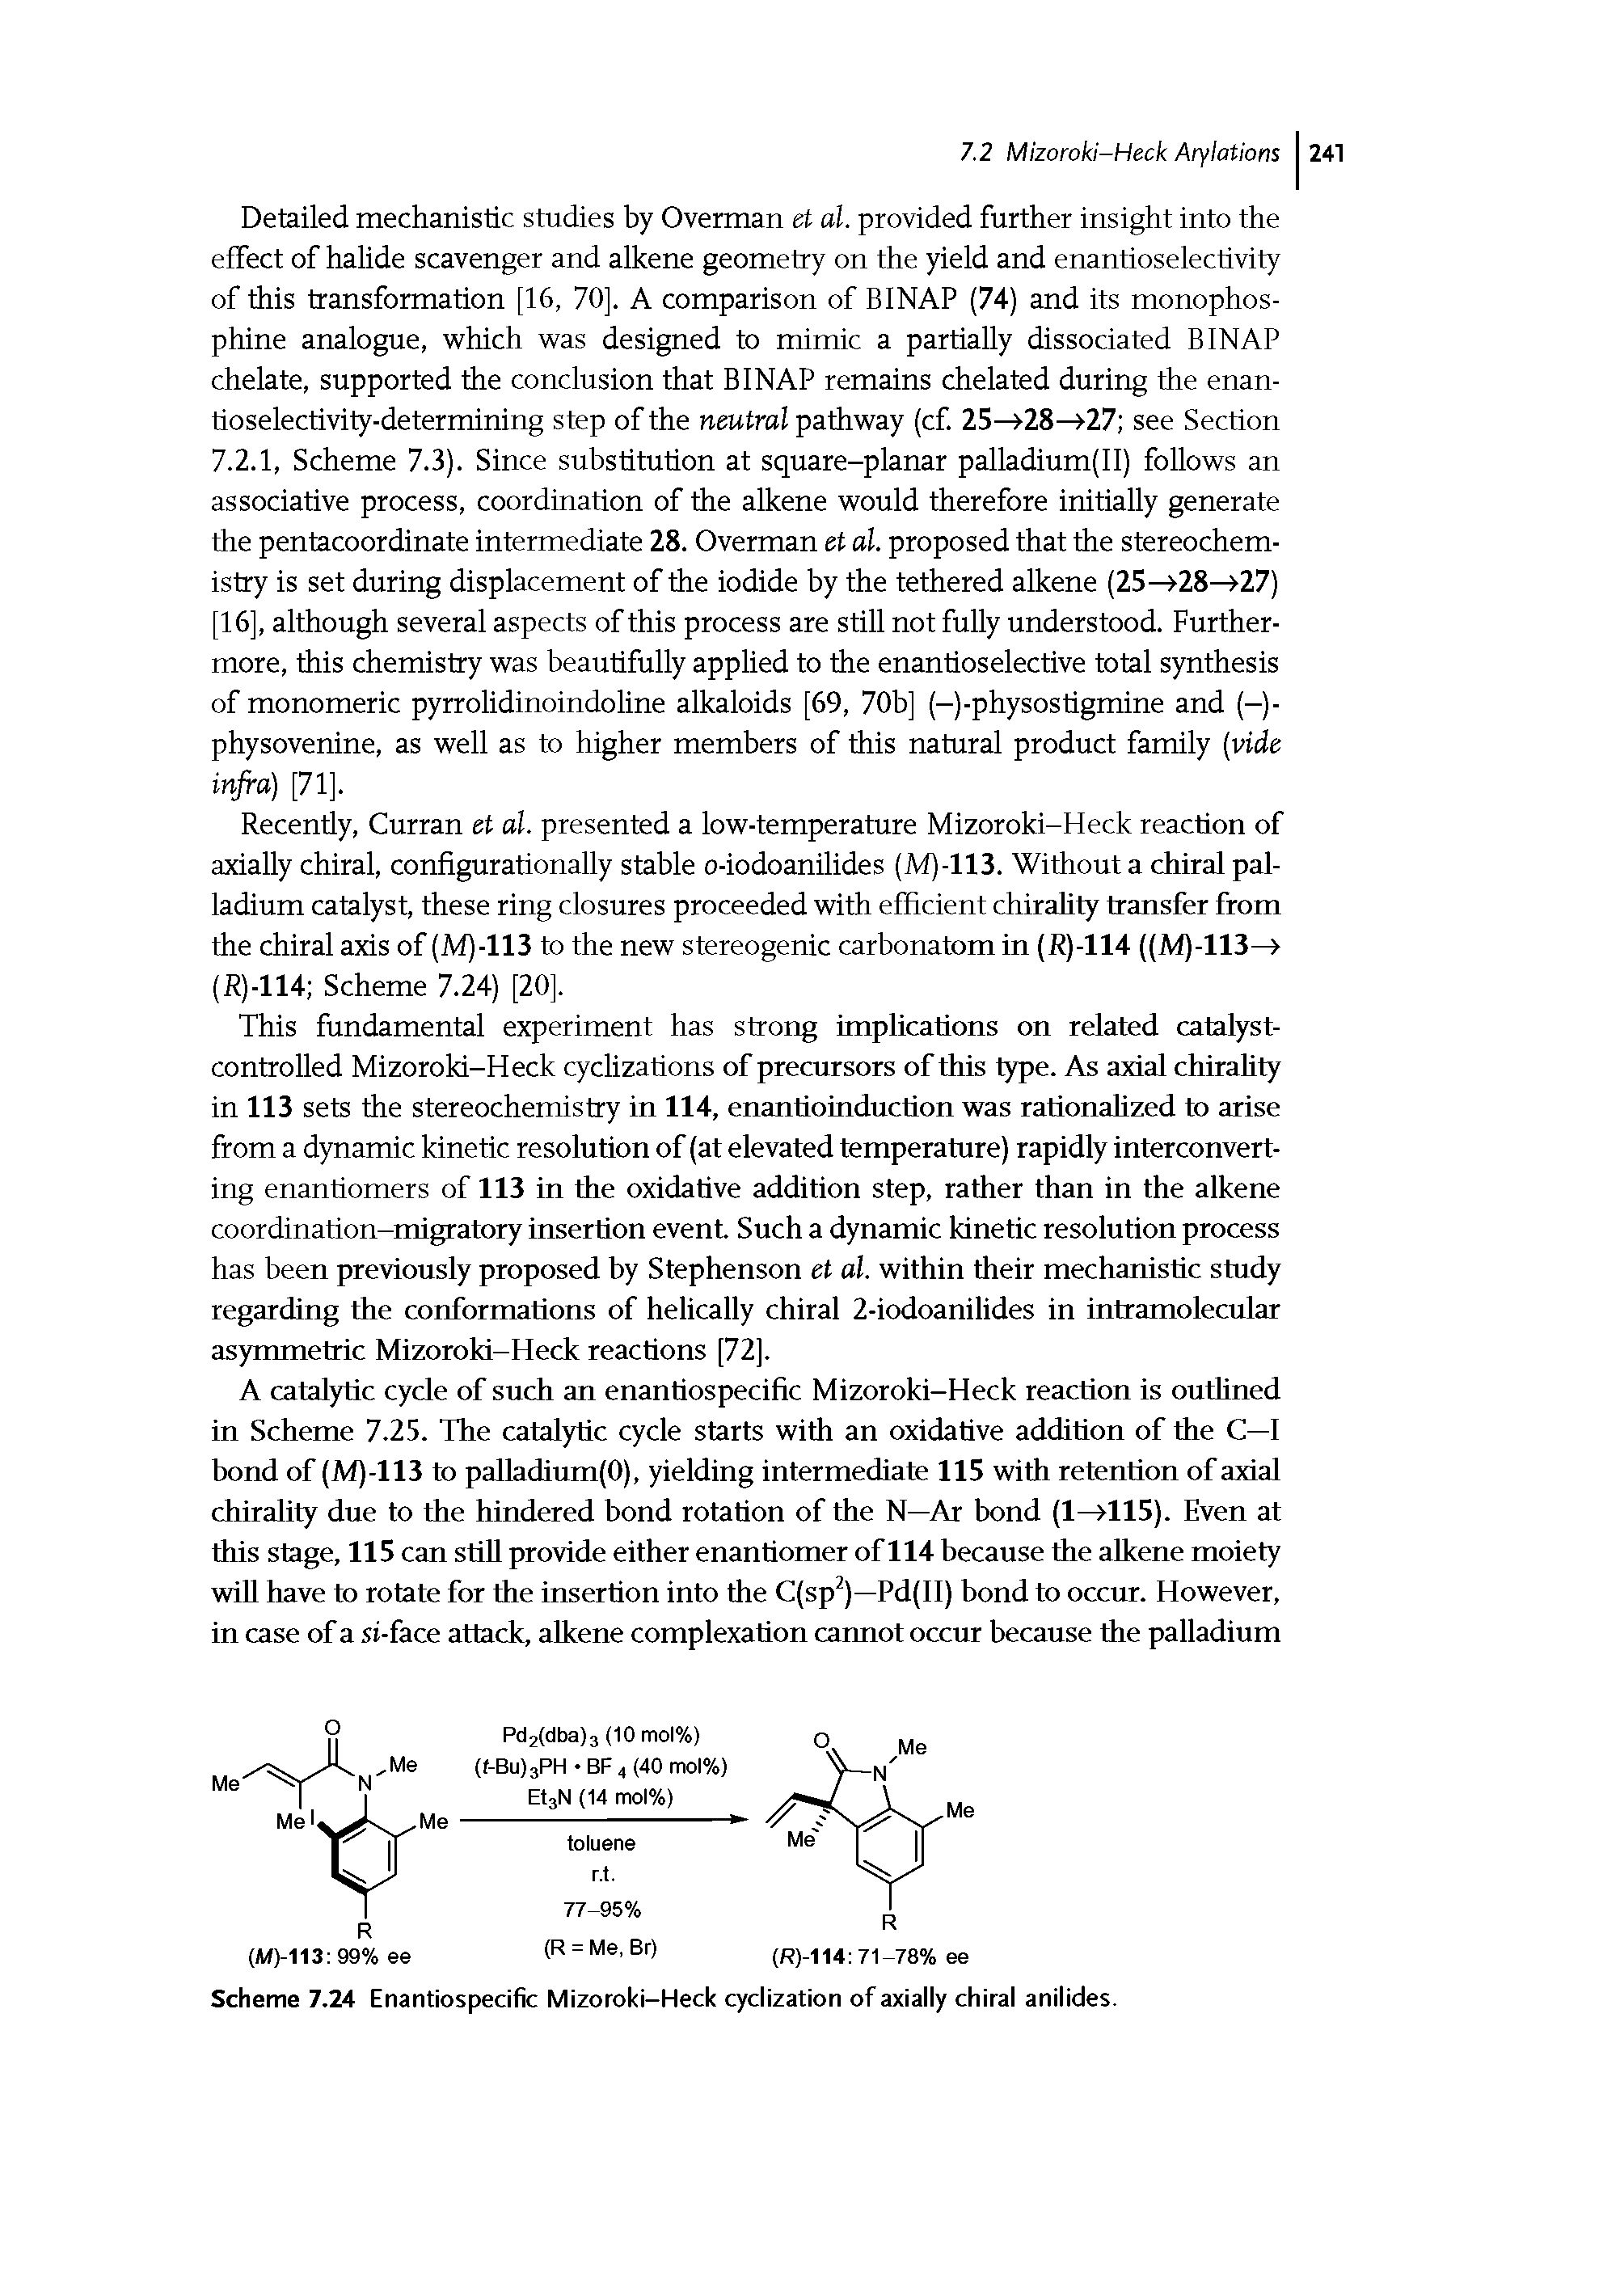 Scheme 7.24 Enantiospecific Mizoroki-Heck cyclization of axially chiral anilides.